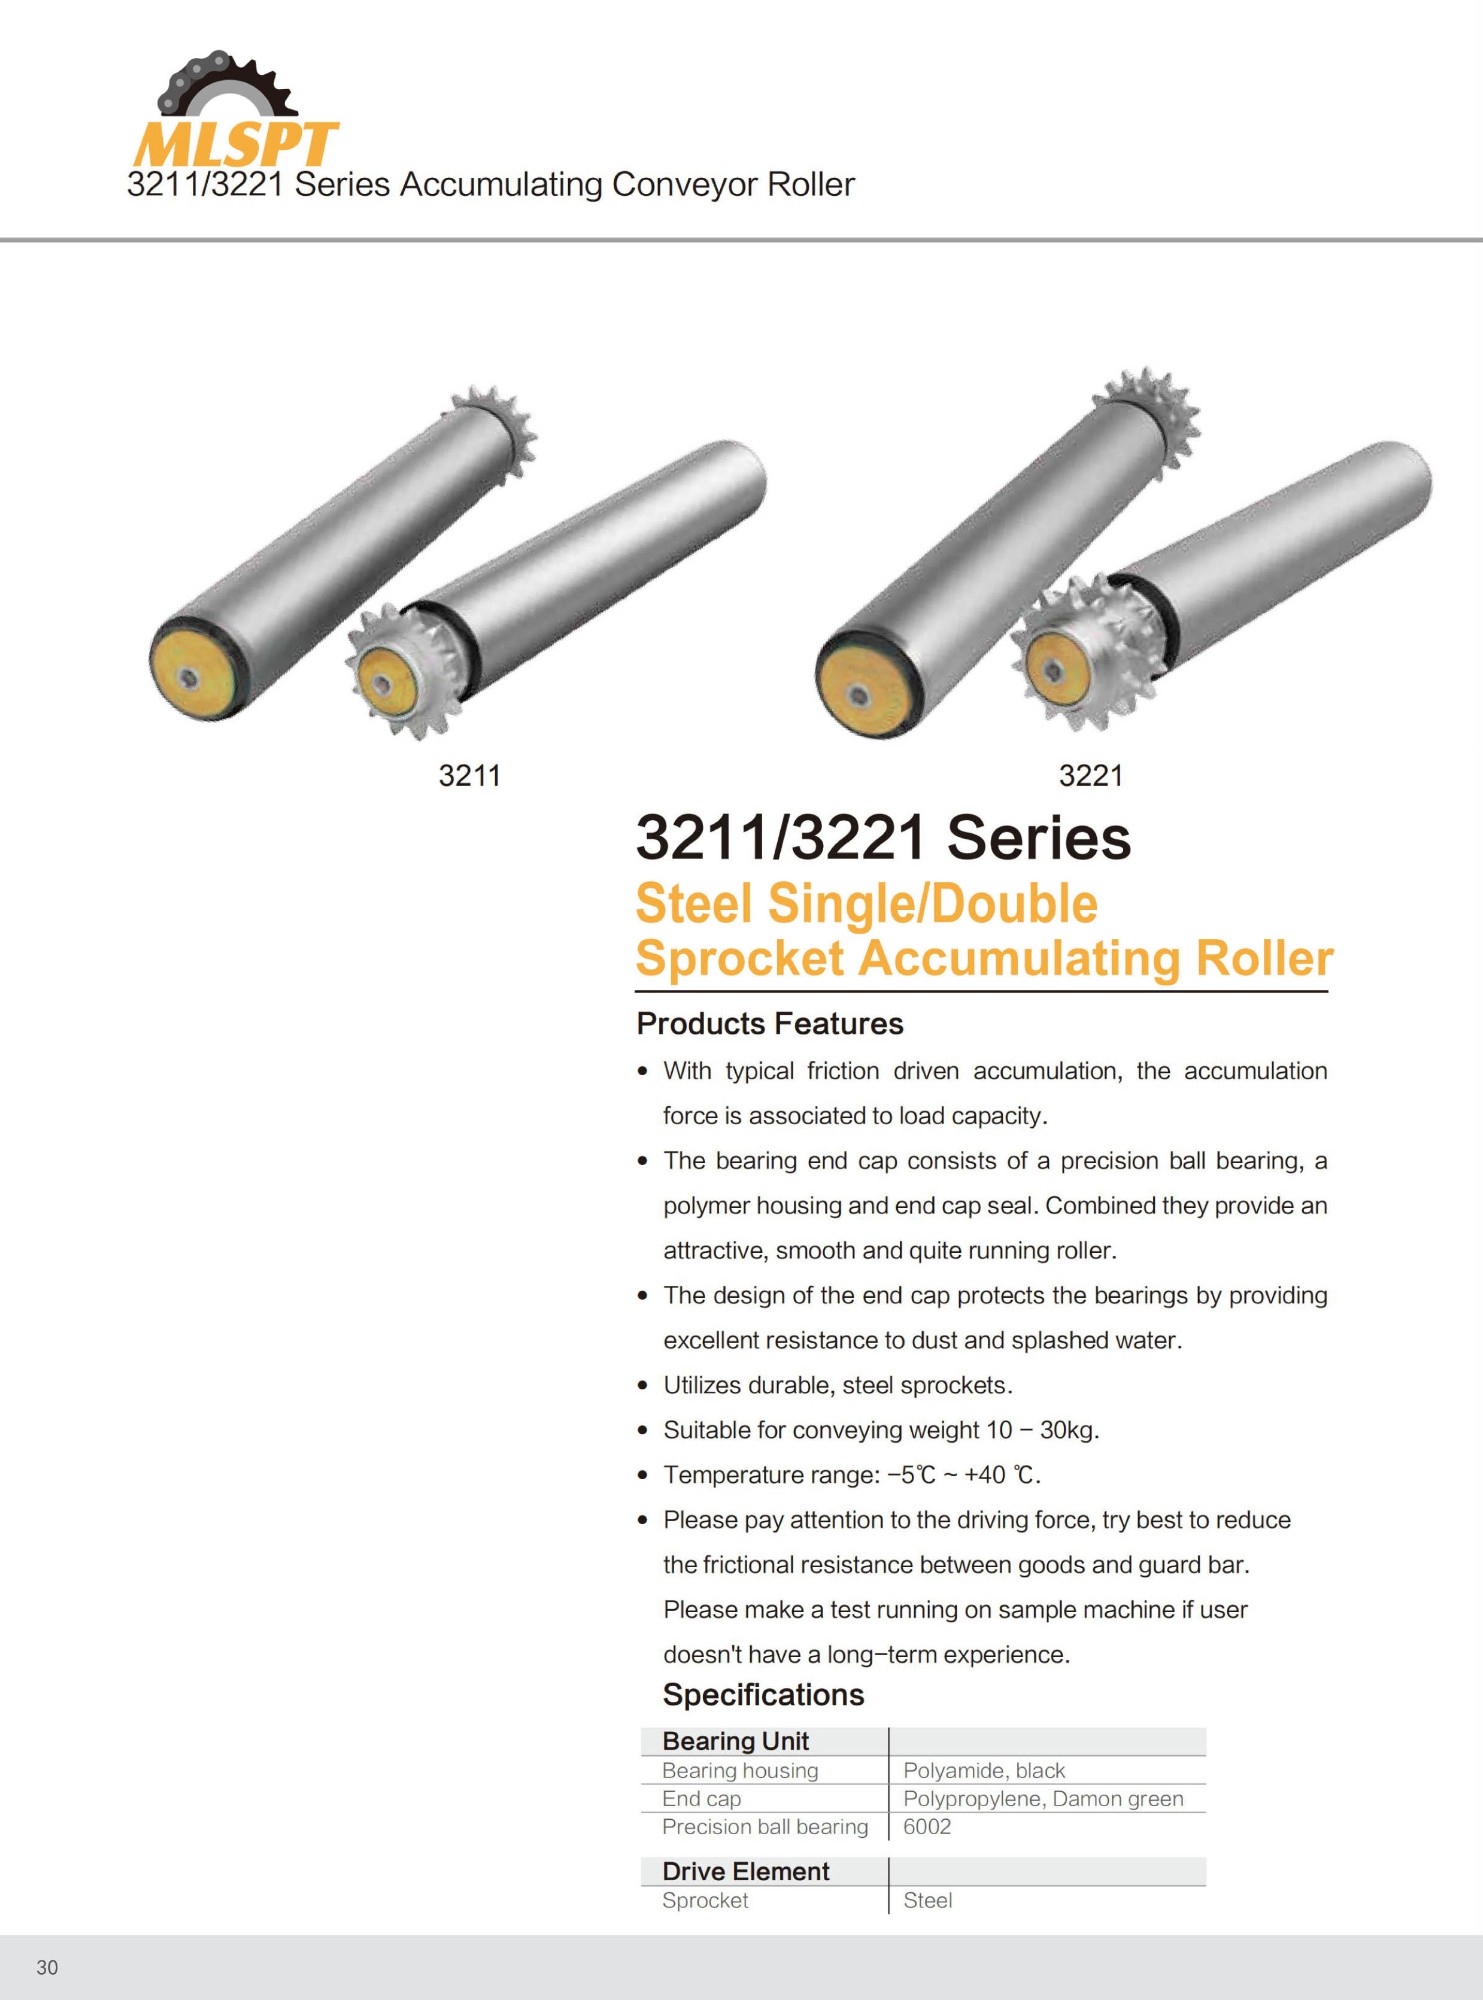 3211/3221 Series Steel Single/Double Sprocket Accumulating Roller